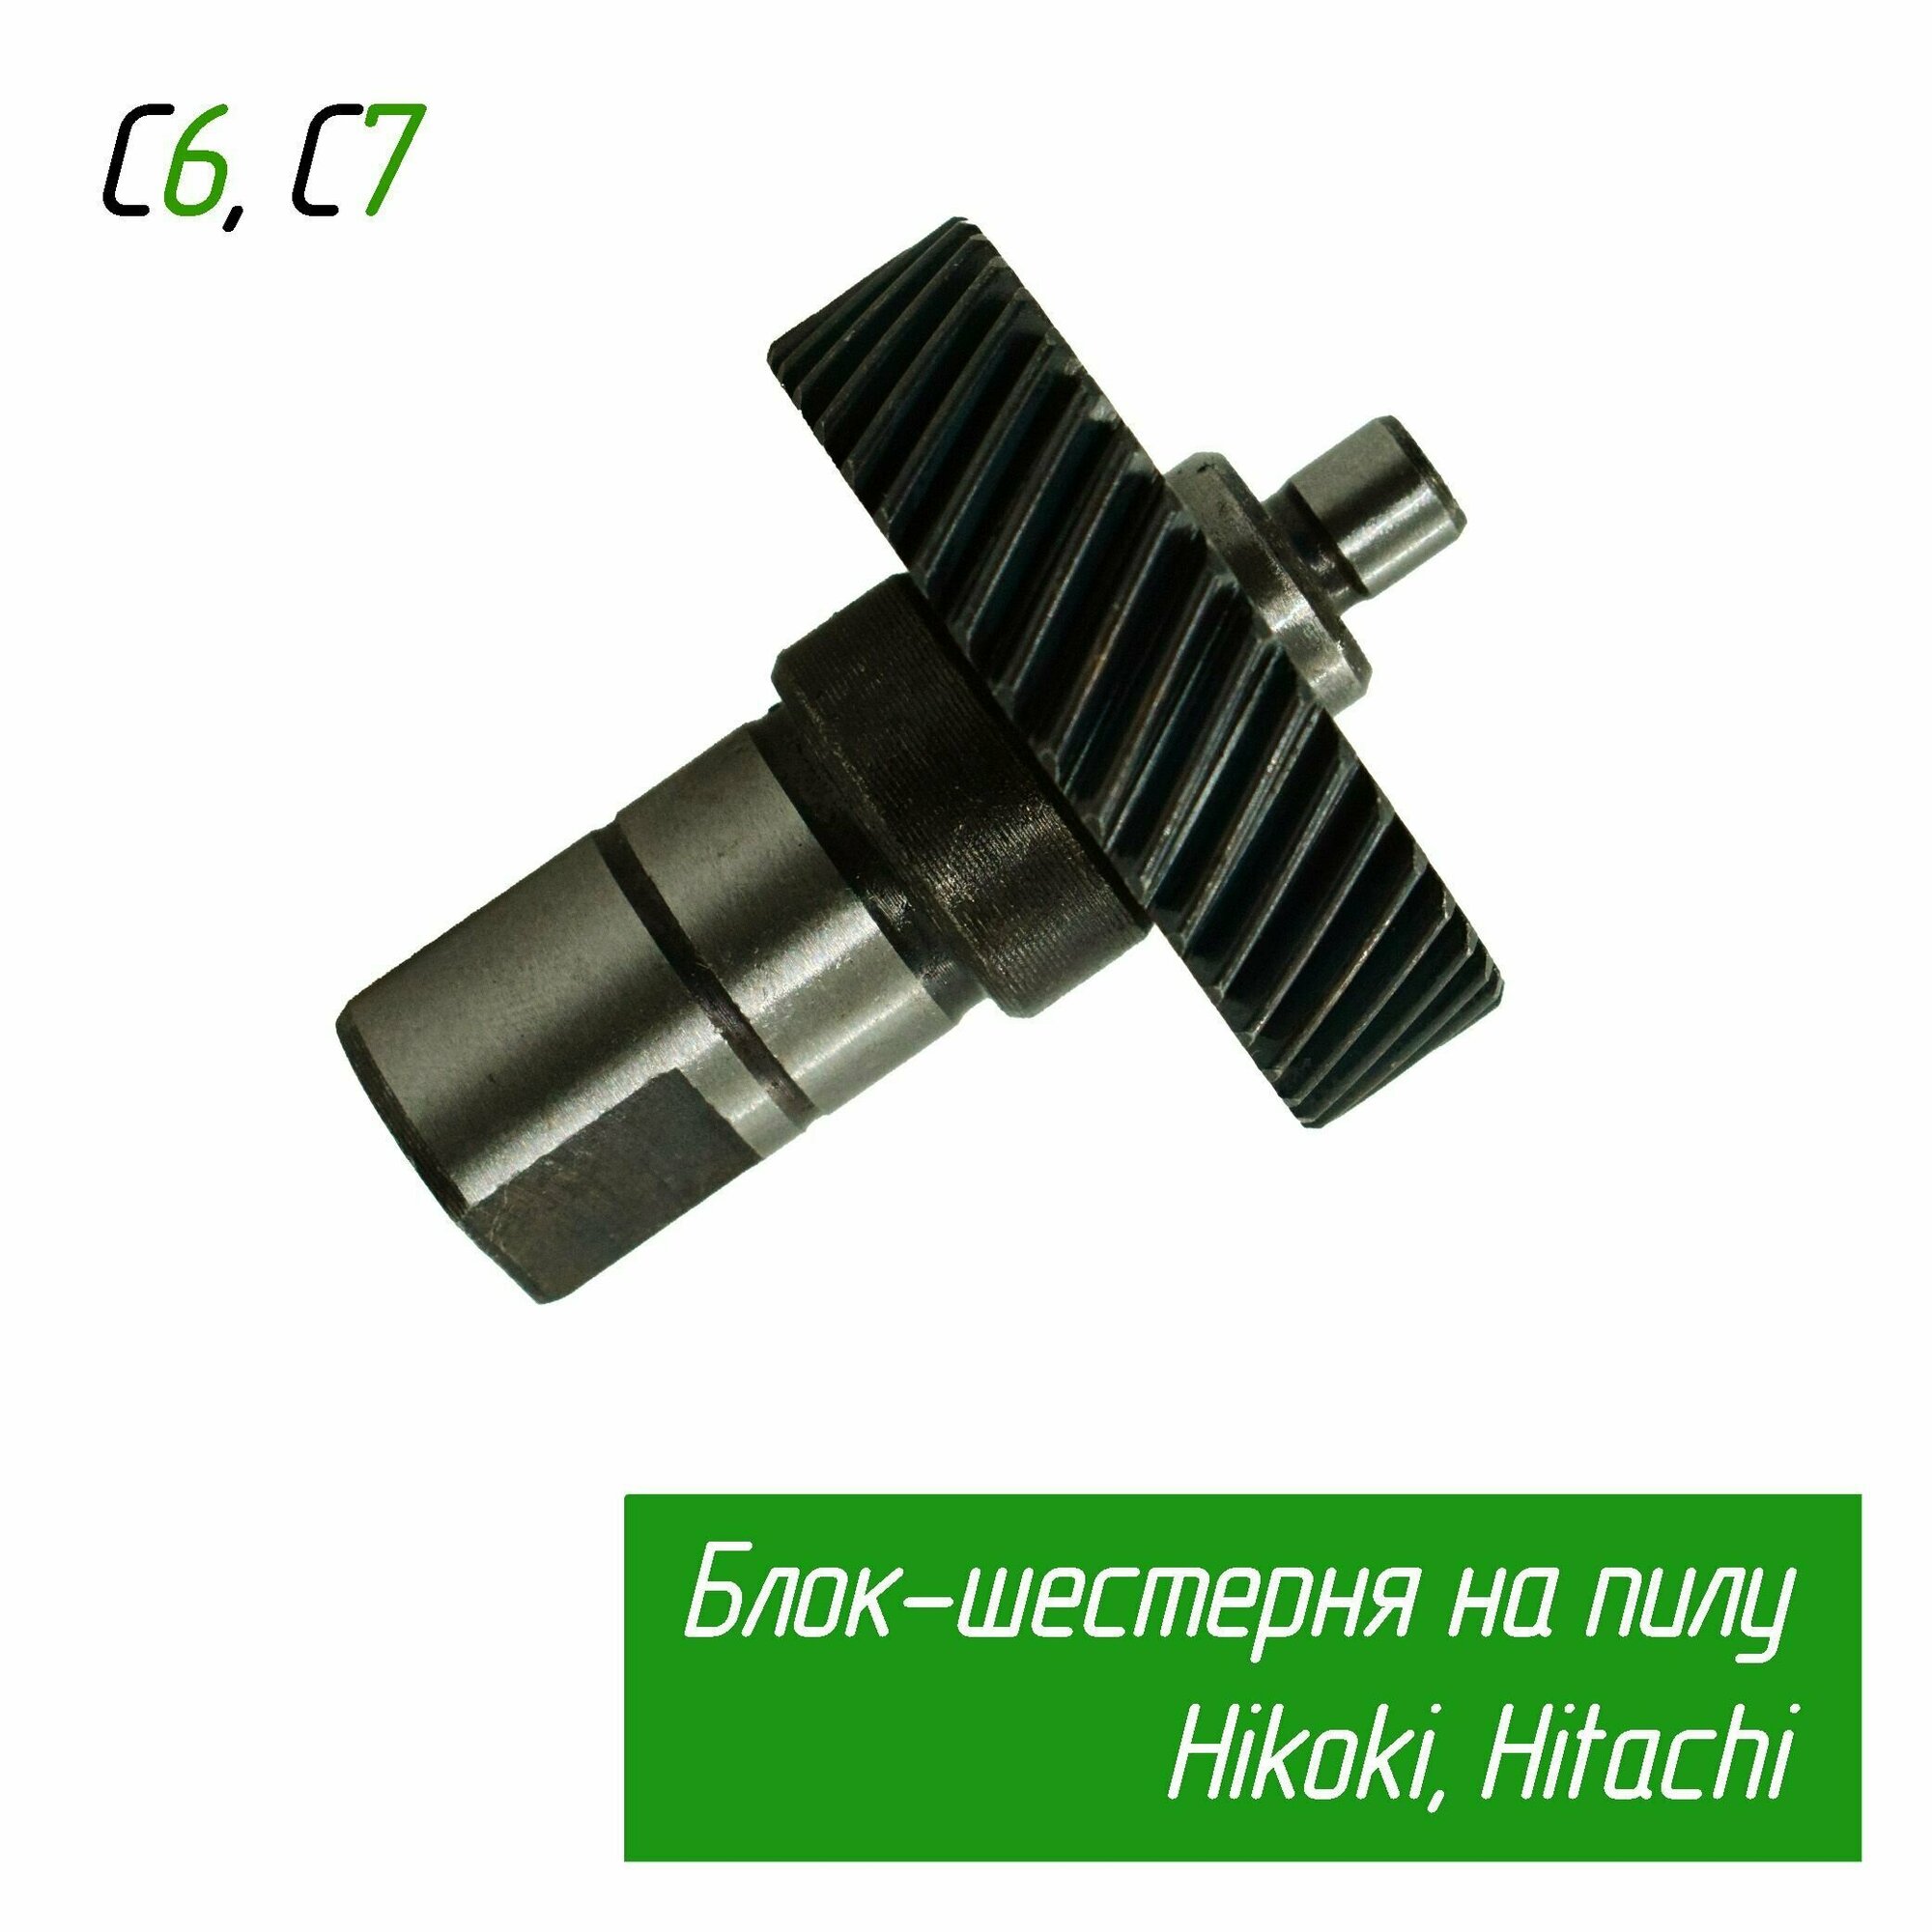 Блок шестерня, шпиндель для циркулярной пилы Hikoki, подходит для циркулярной пилы Hitachi (Хитачи) 322088 C6MFA, C7MFA AEZ